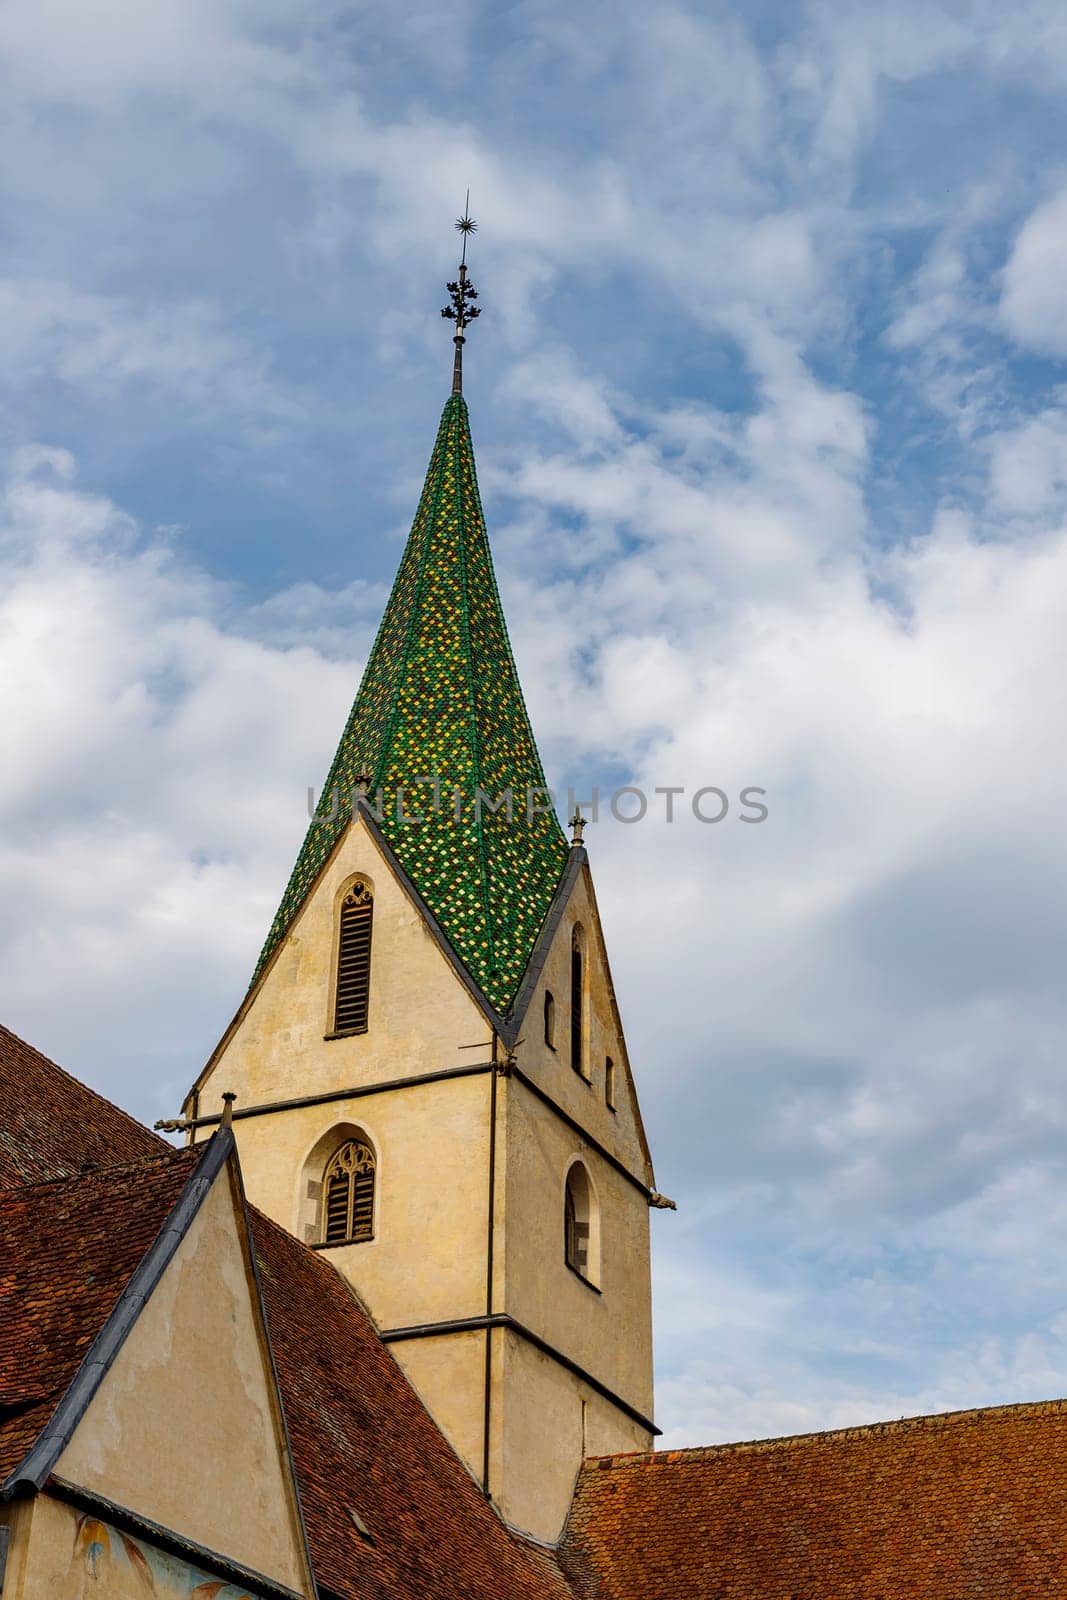 A tower of Blaubeuren Abbey in the city of Blaubeuren, Germany